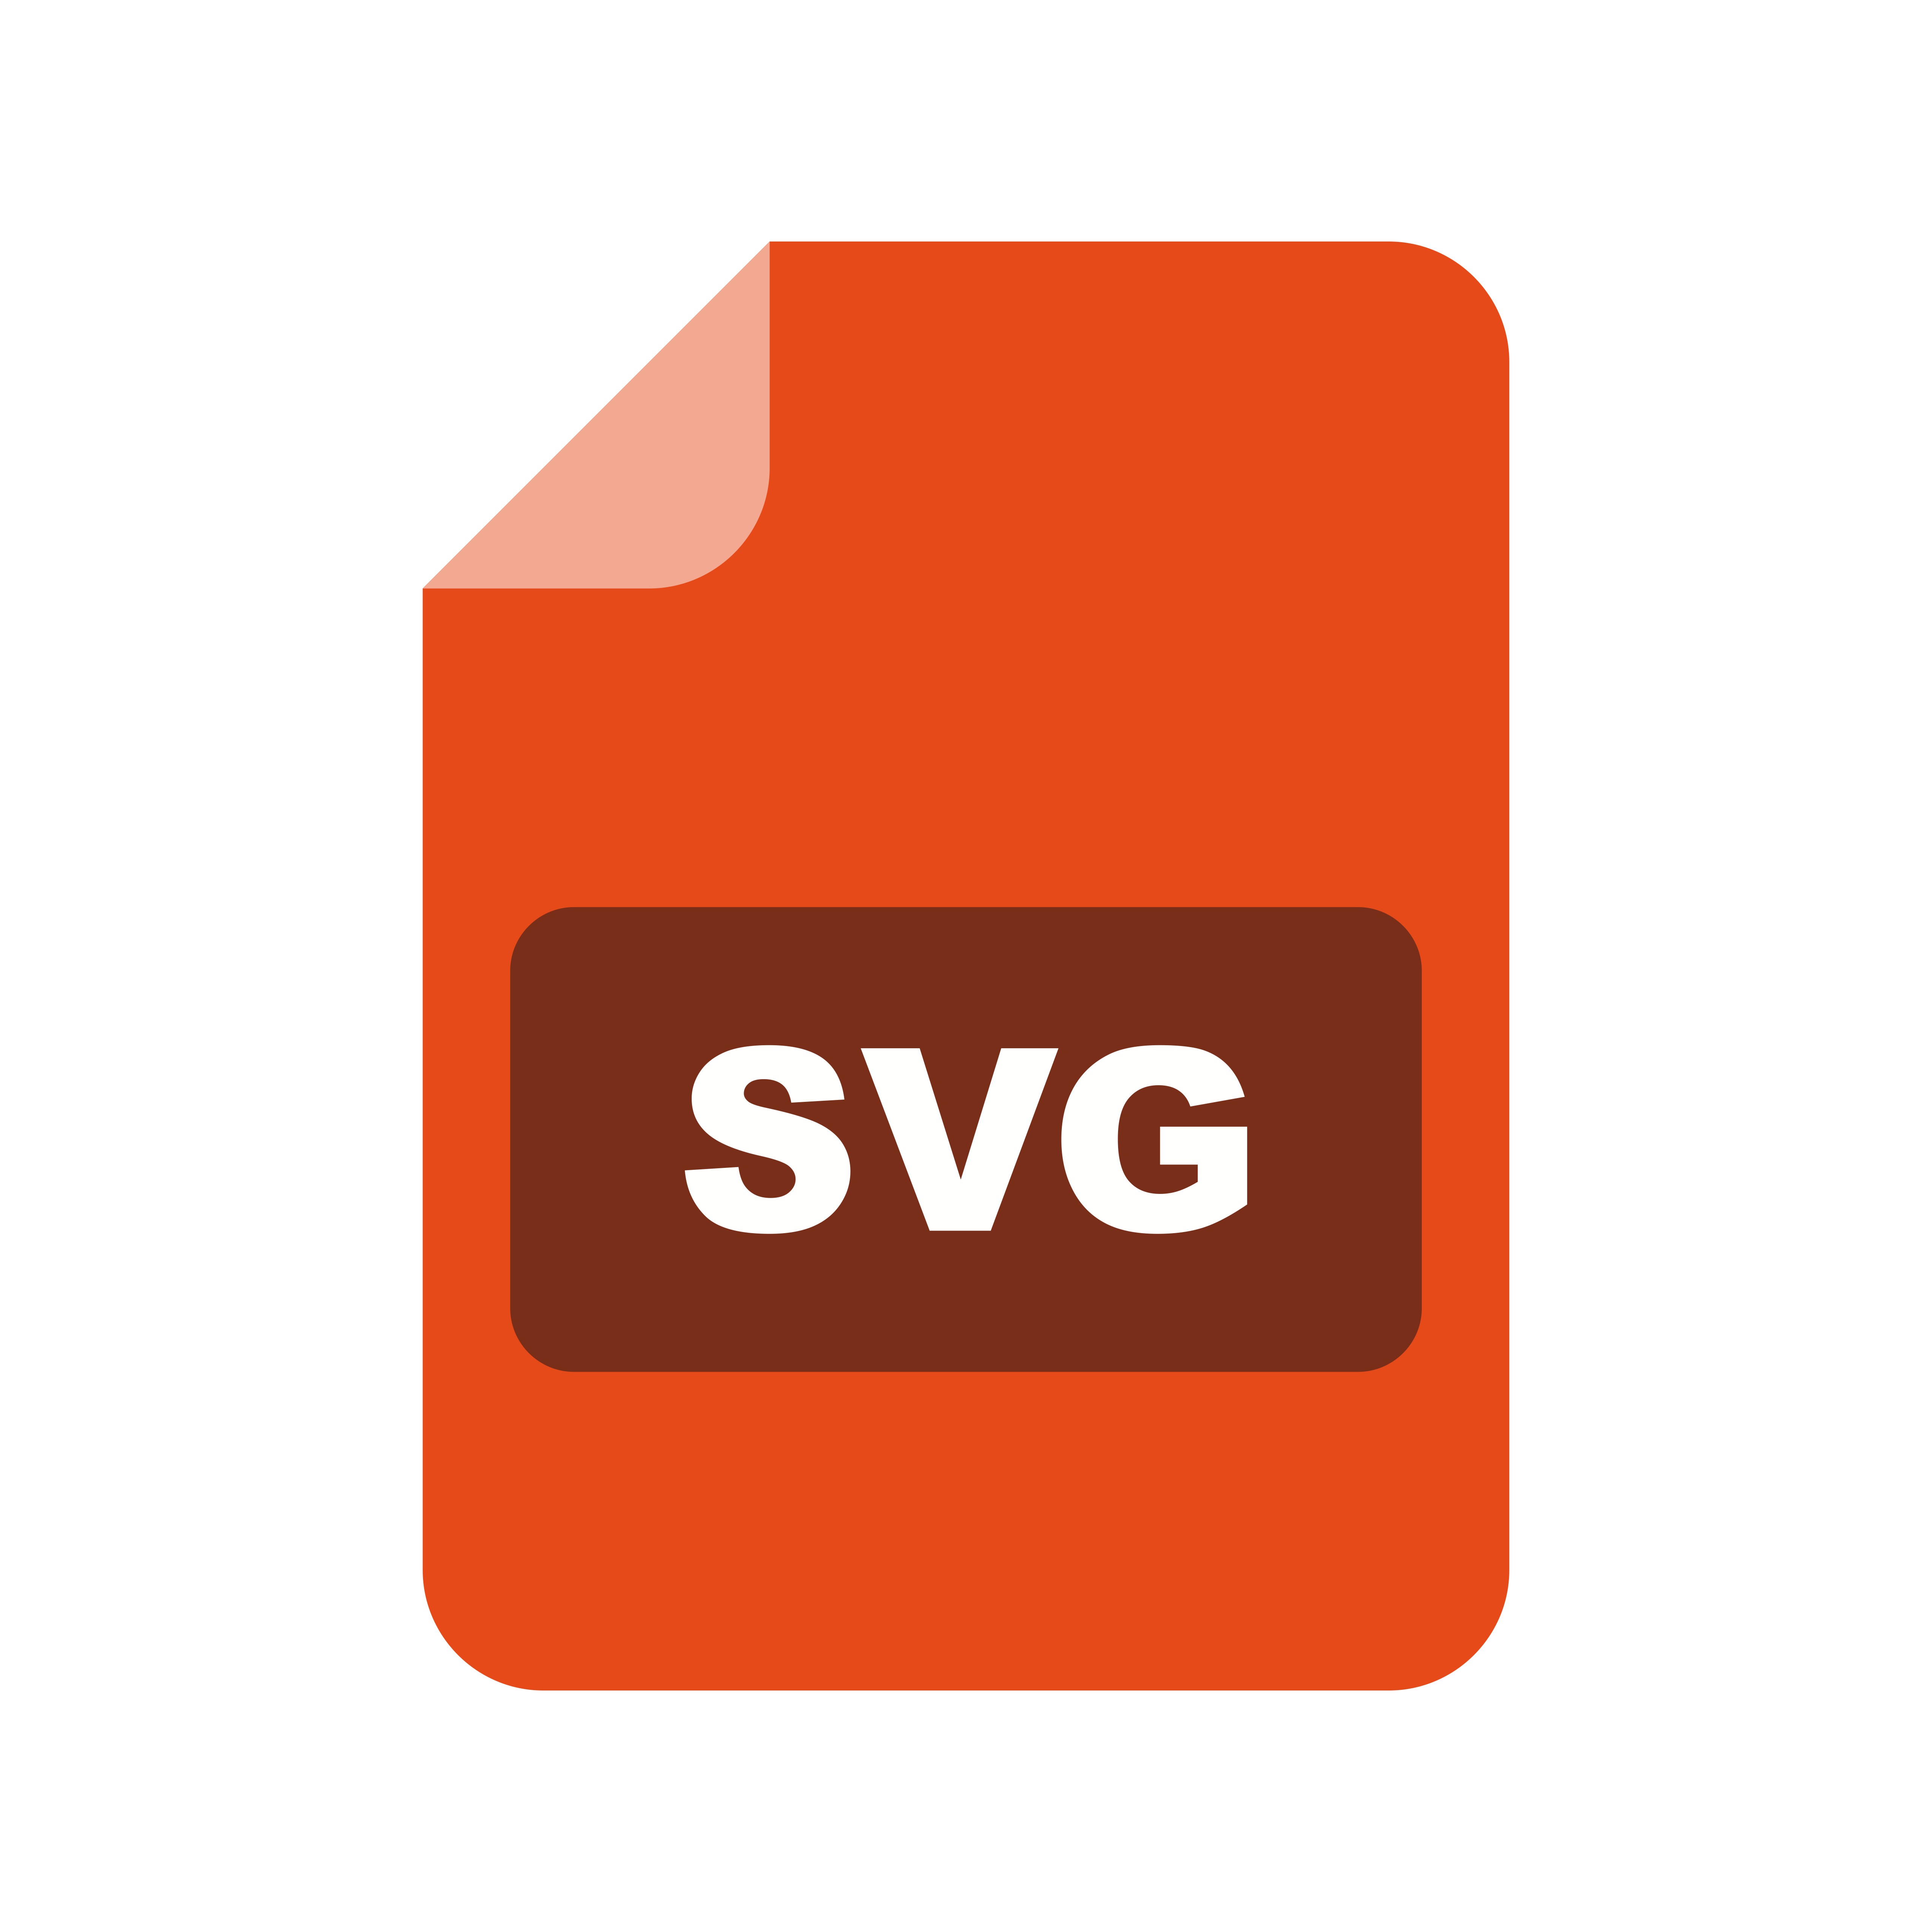 SVG Vector Icon - Download Free Vectors, Clipart Graphics & Vector Art